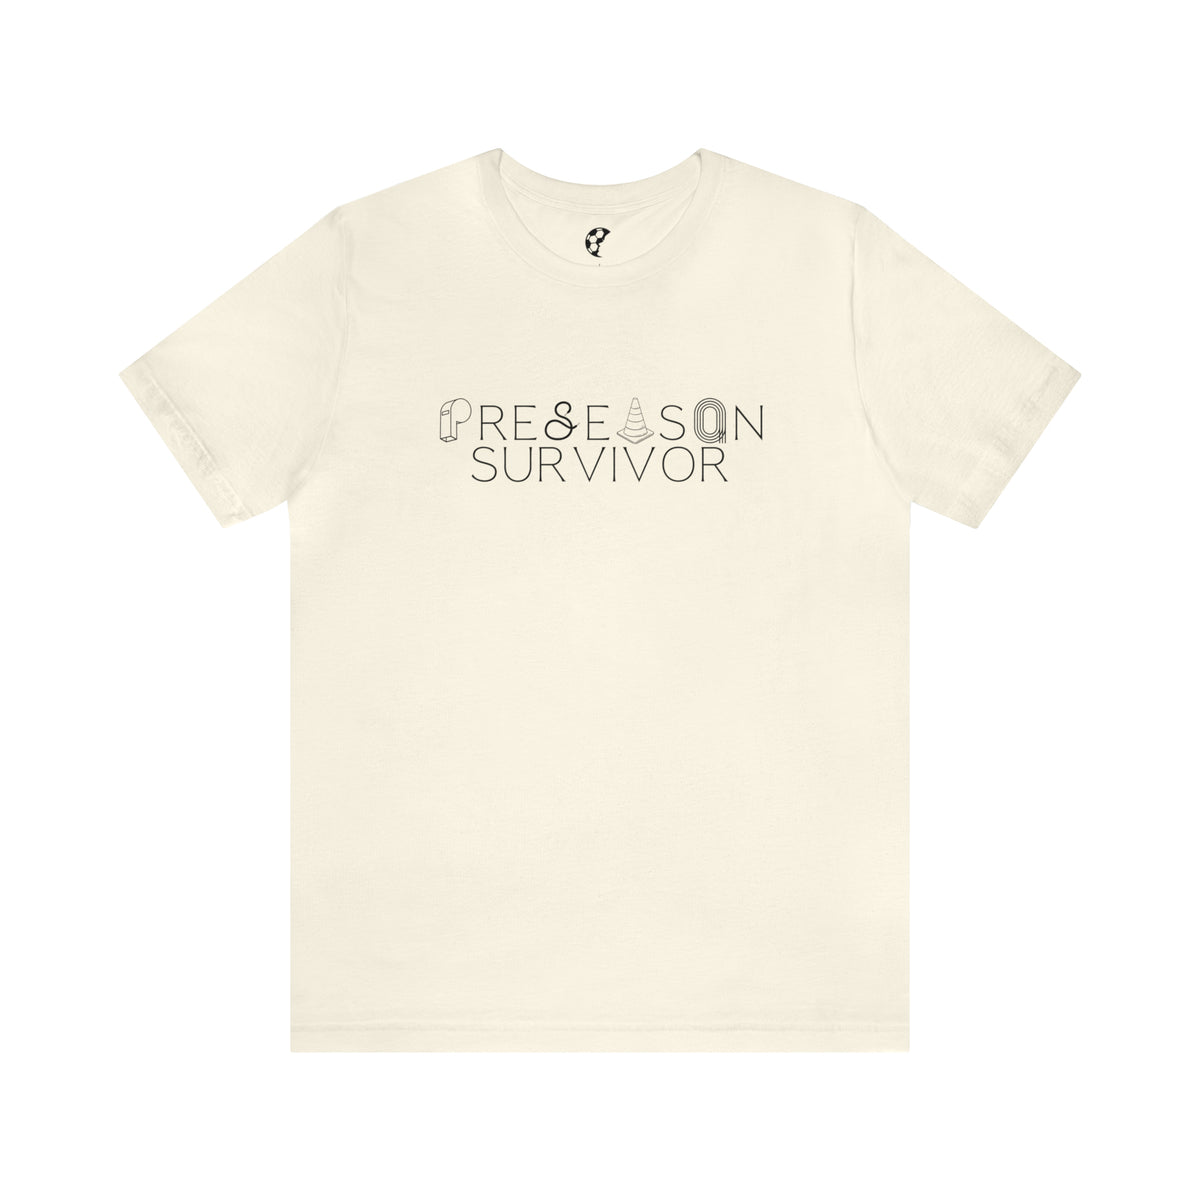 Preseason Survivor Adult T-Shirt